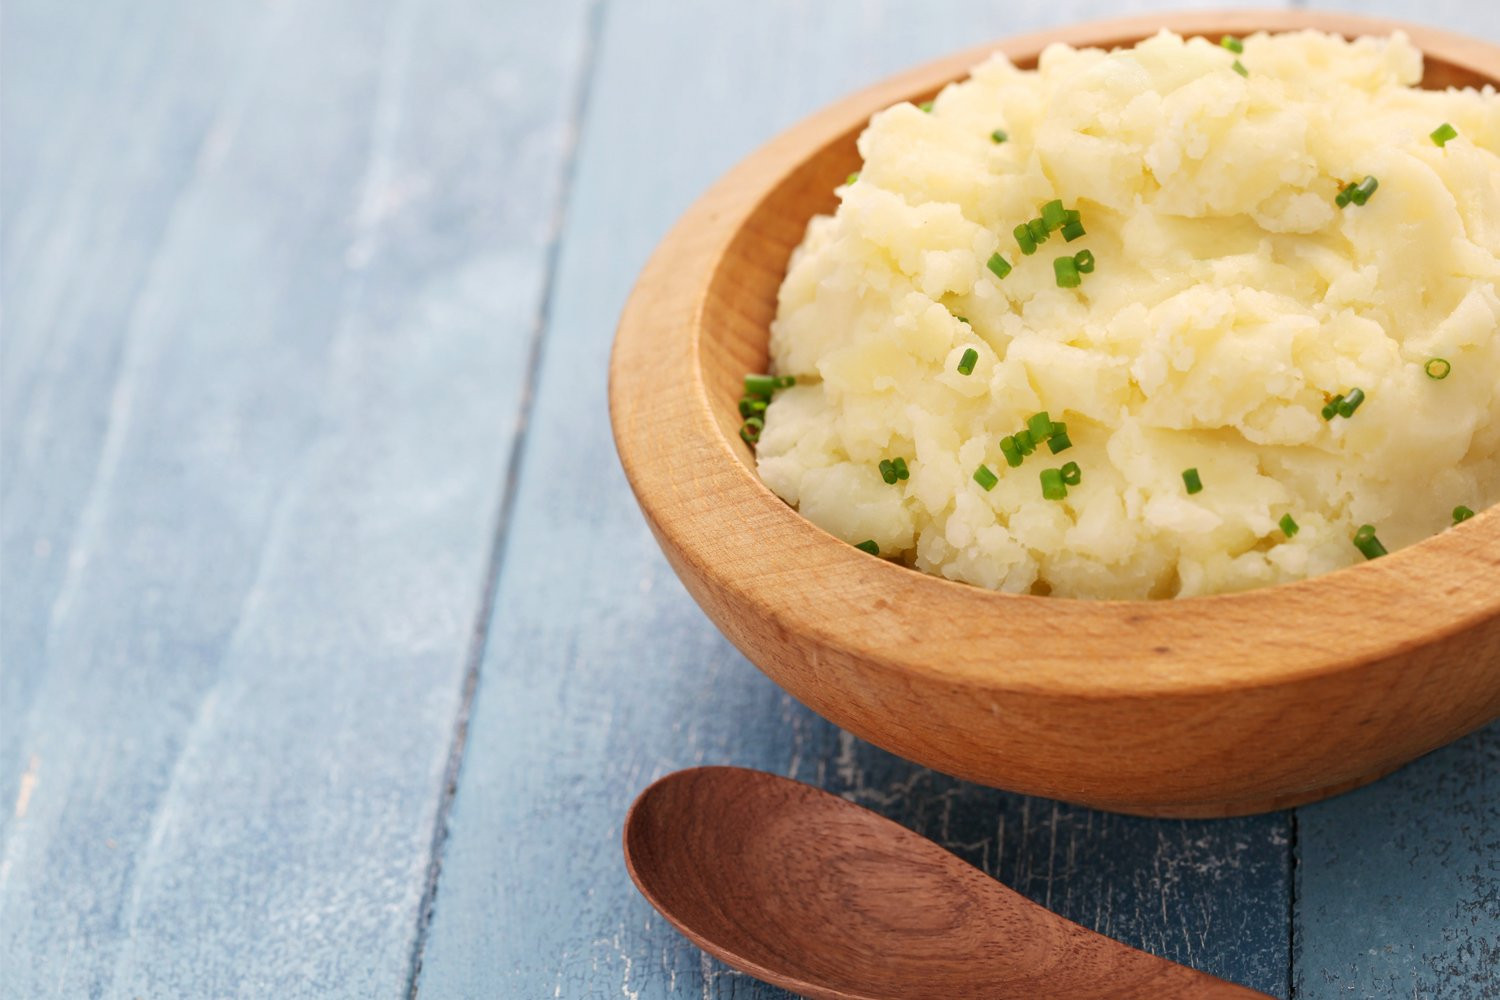 Low Calorie Mashed Potatoes
 Low Calorie Creamy Cauliflower "Mashed Potatoes" Recipe